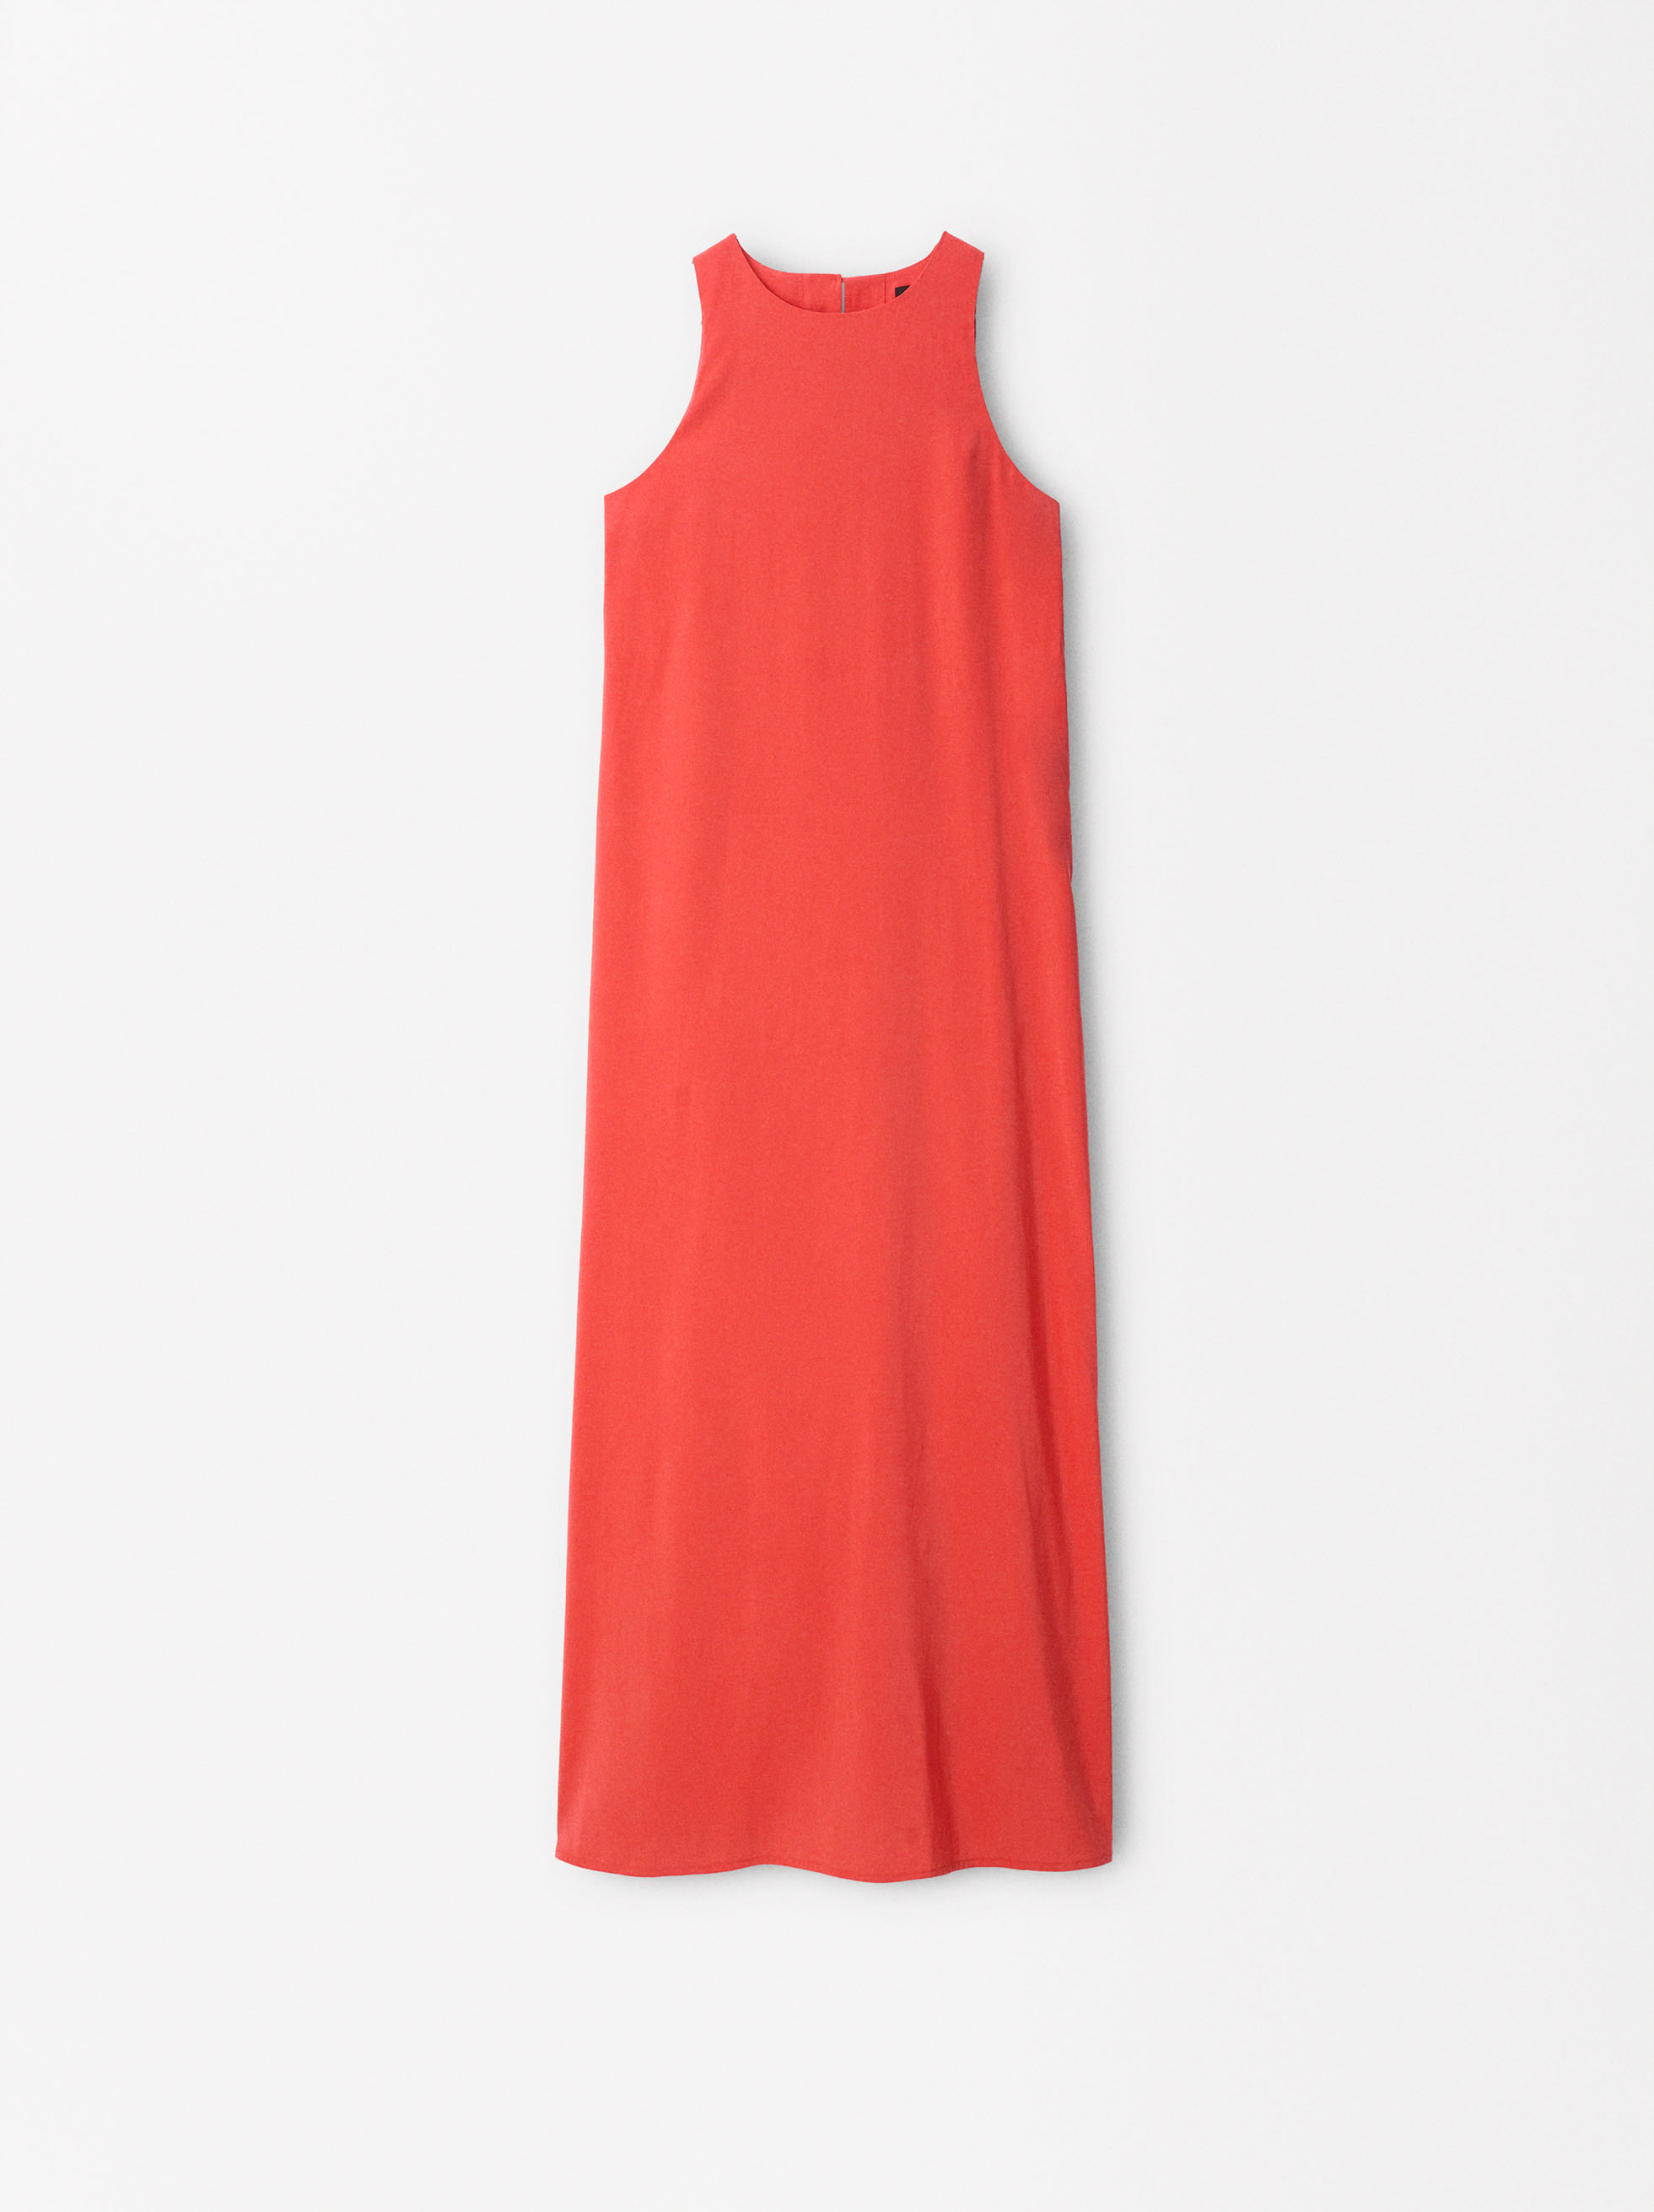 Loose-Fitting Sleeveless Dress image number 4.0